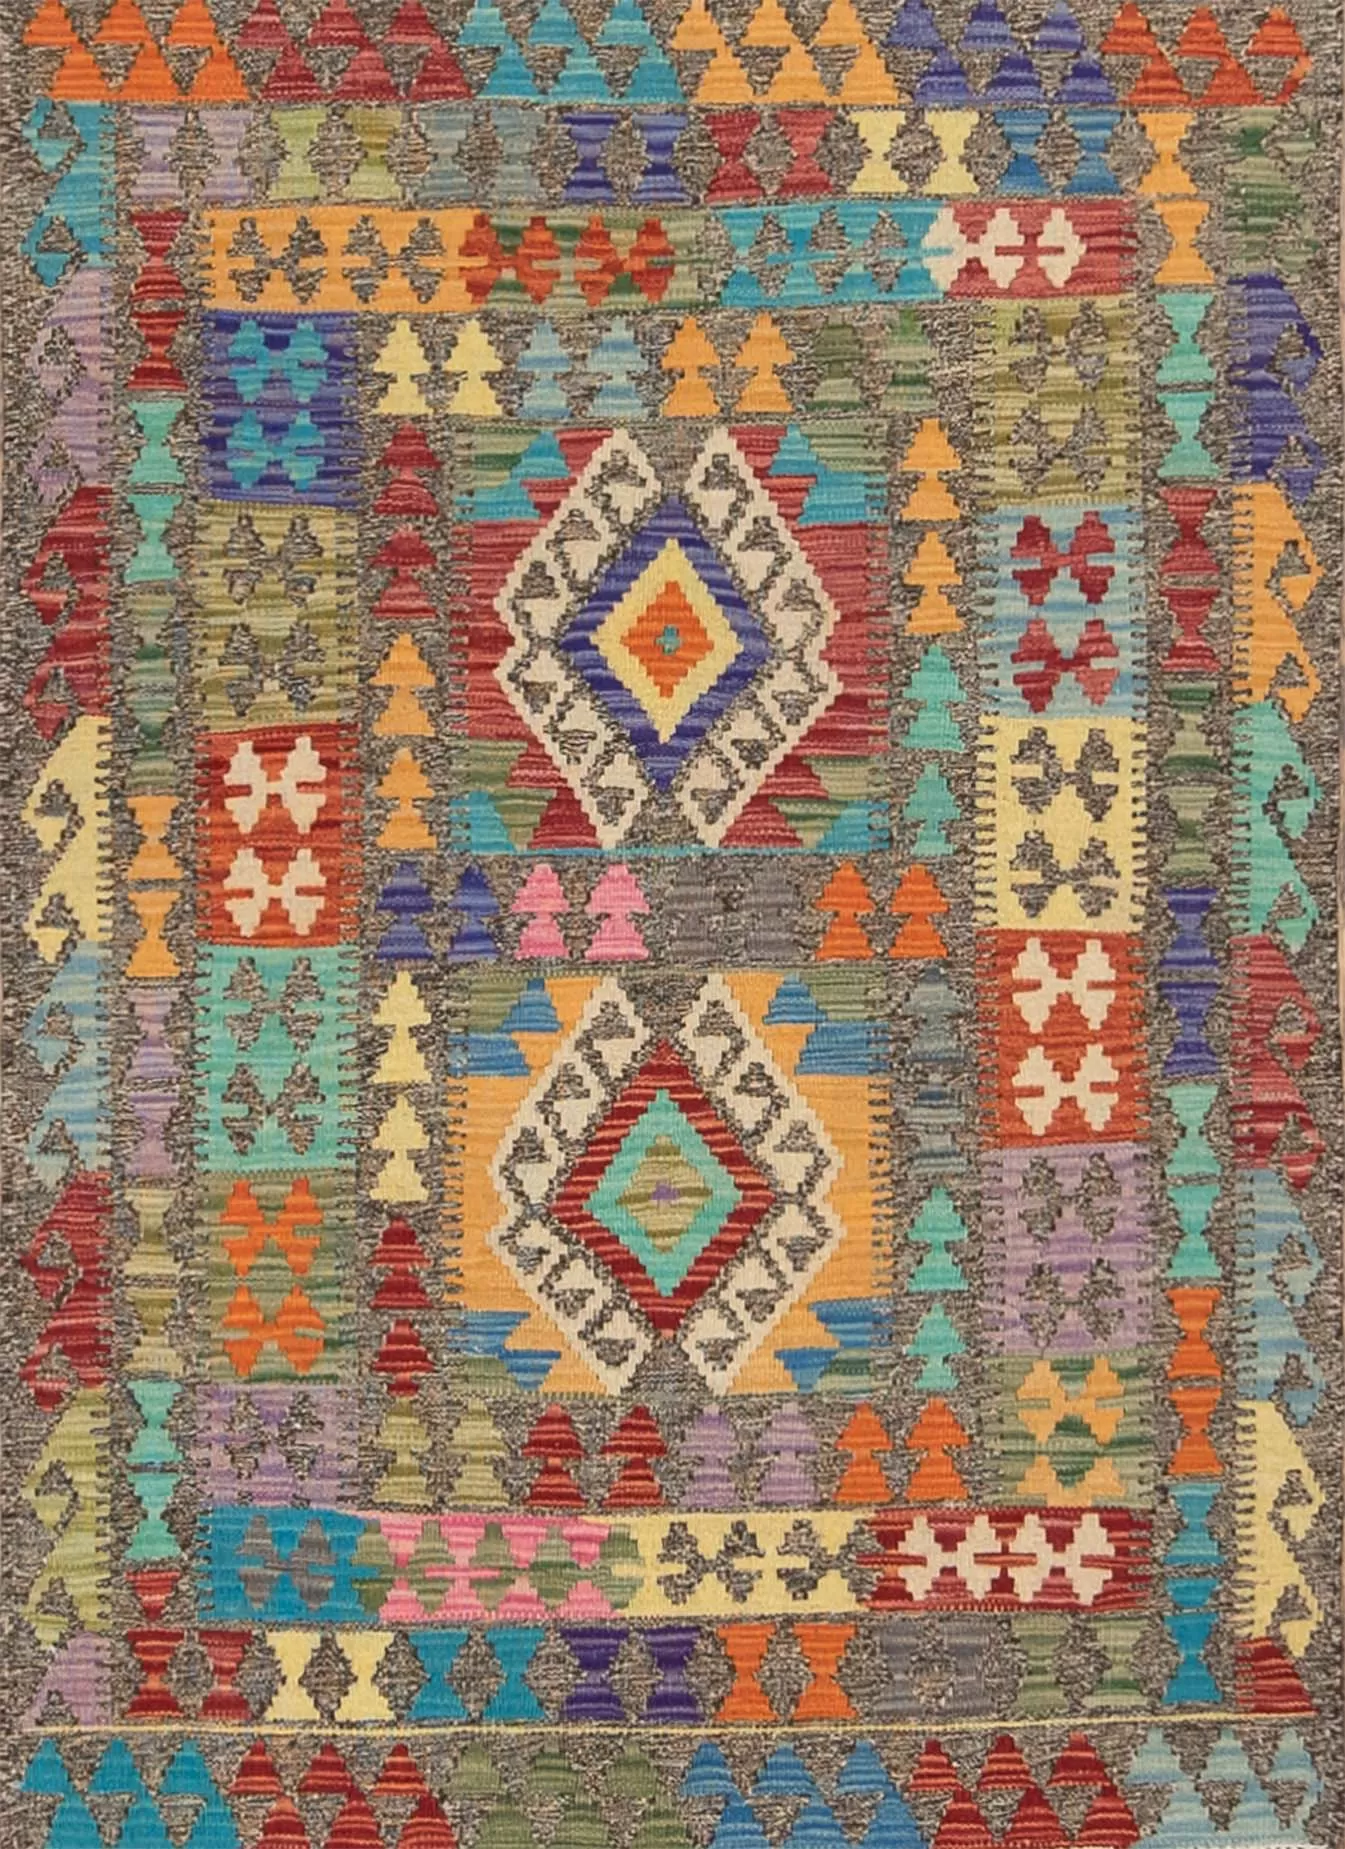 Small kilim rug. Handmade multicolor geometric design kilim rug. Size 3.5x4.10.